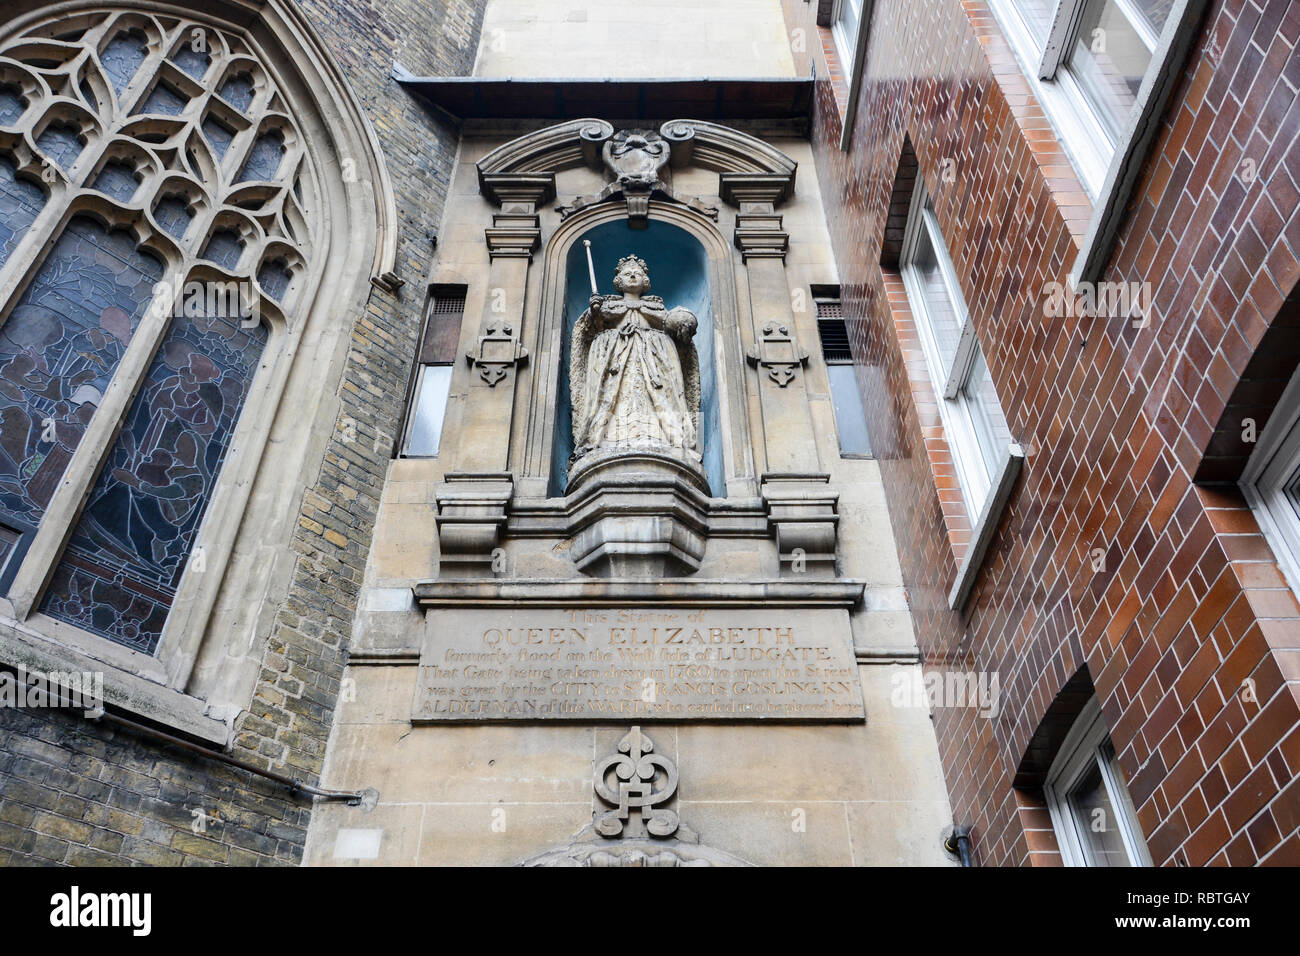 Statue of Queen Elizabeth 1, the Virgin Queen, outside the Guild Church of St Dunstan-in-the-West, Fleet Street, City of London, UK Stock Photo